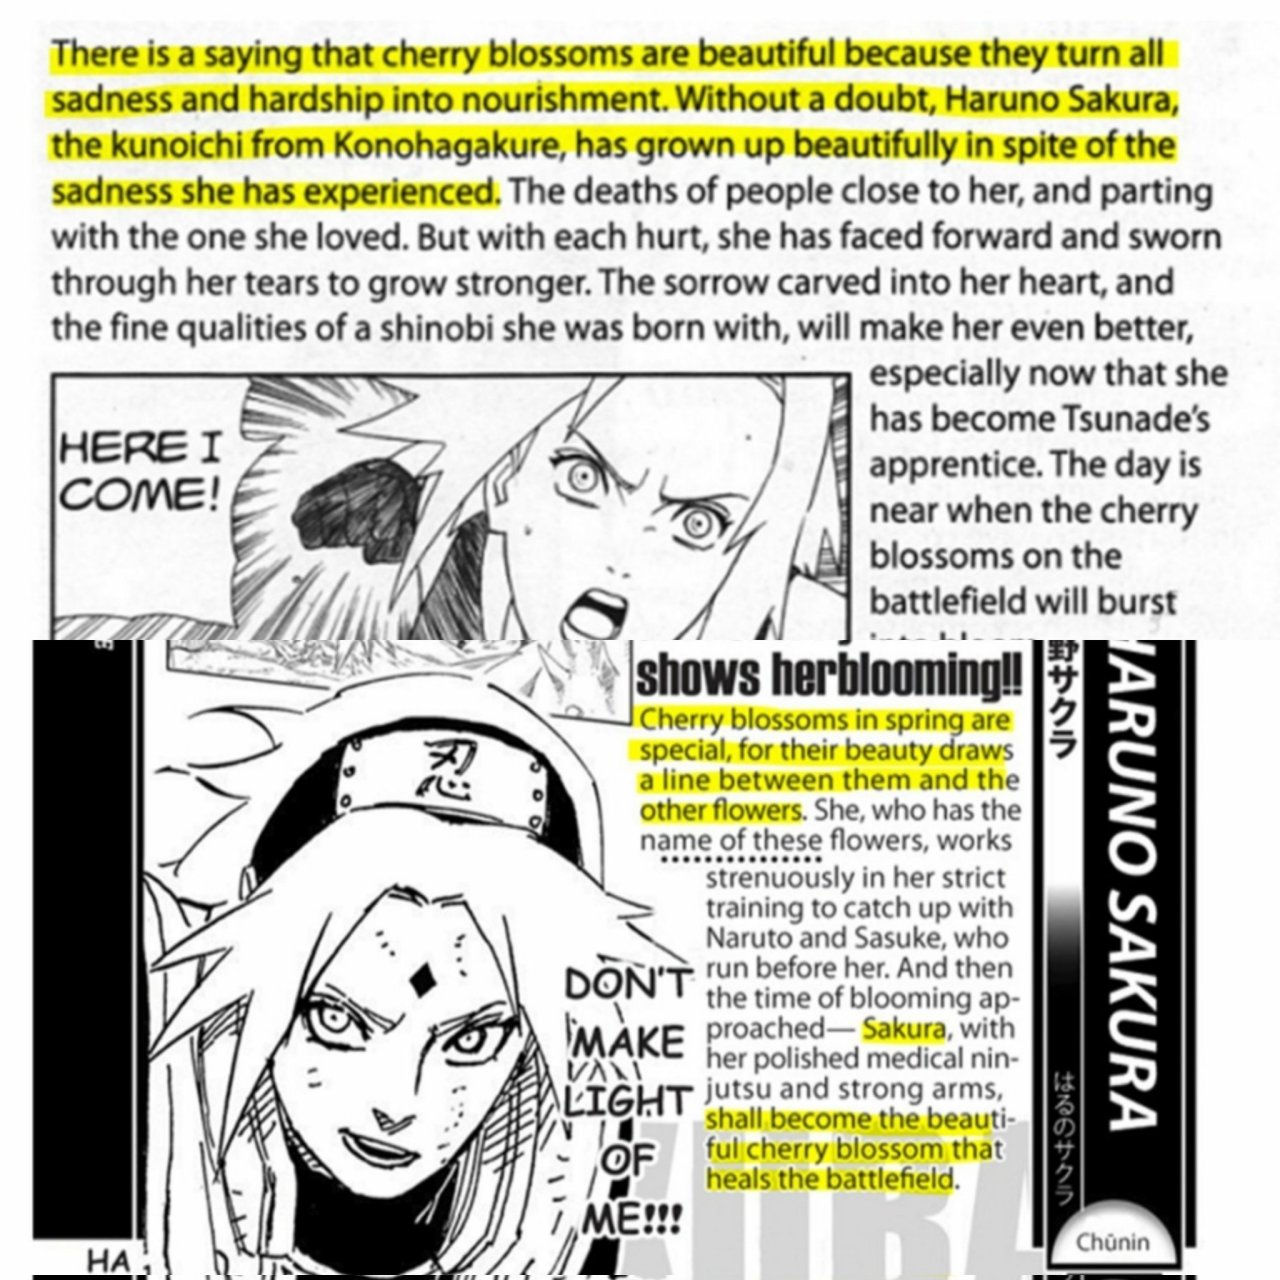 Sasusaku - The Boruto: Naruto the Movie novel strongly